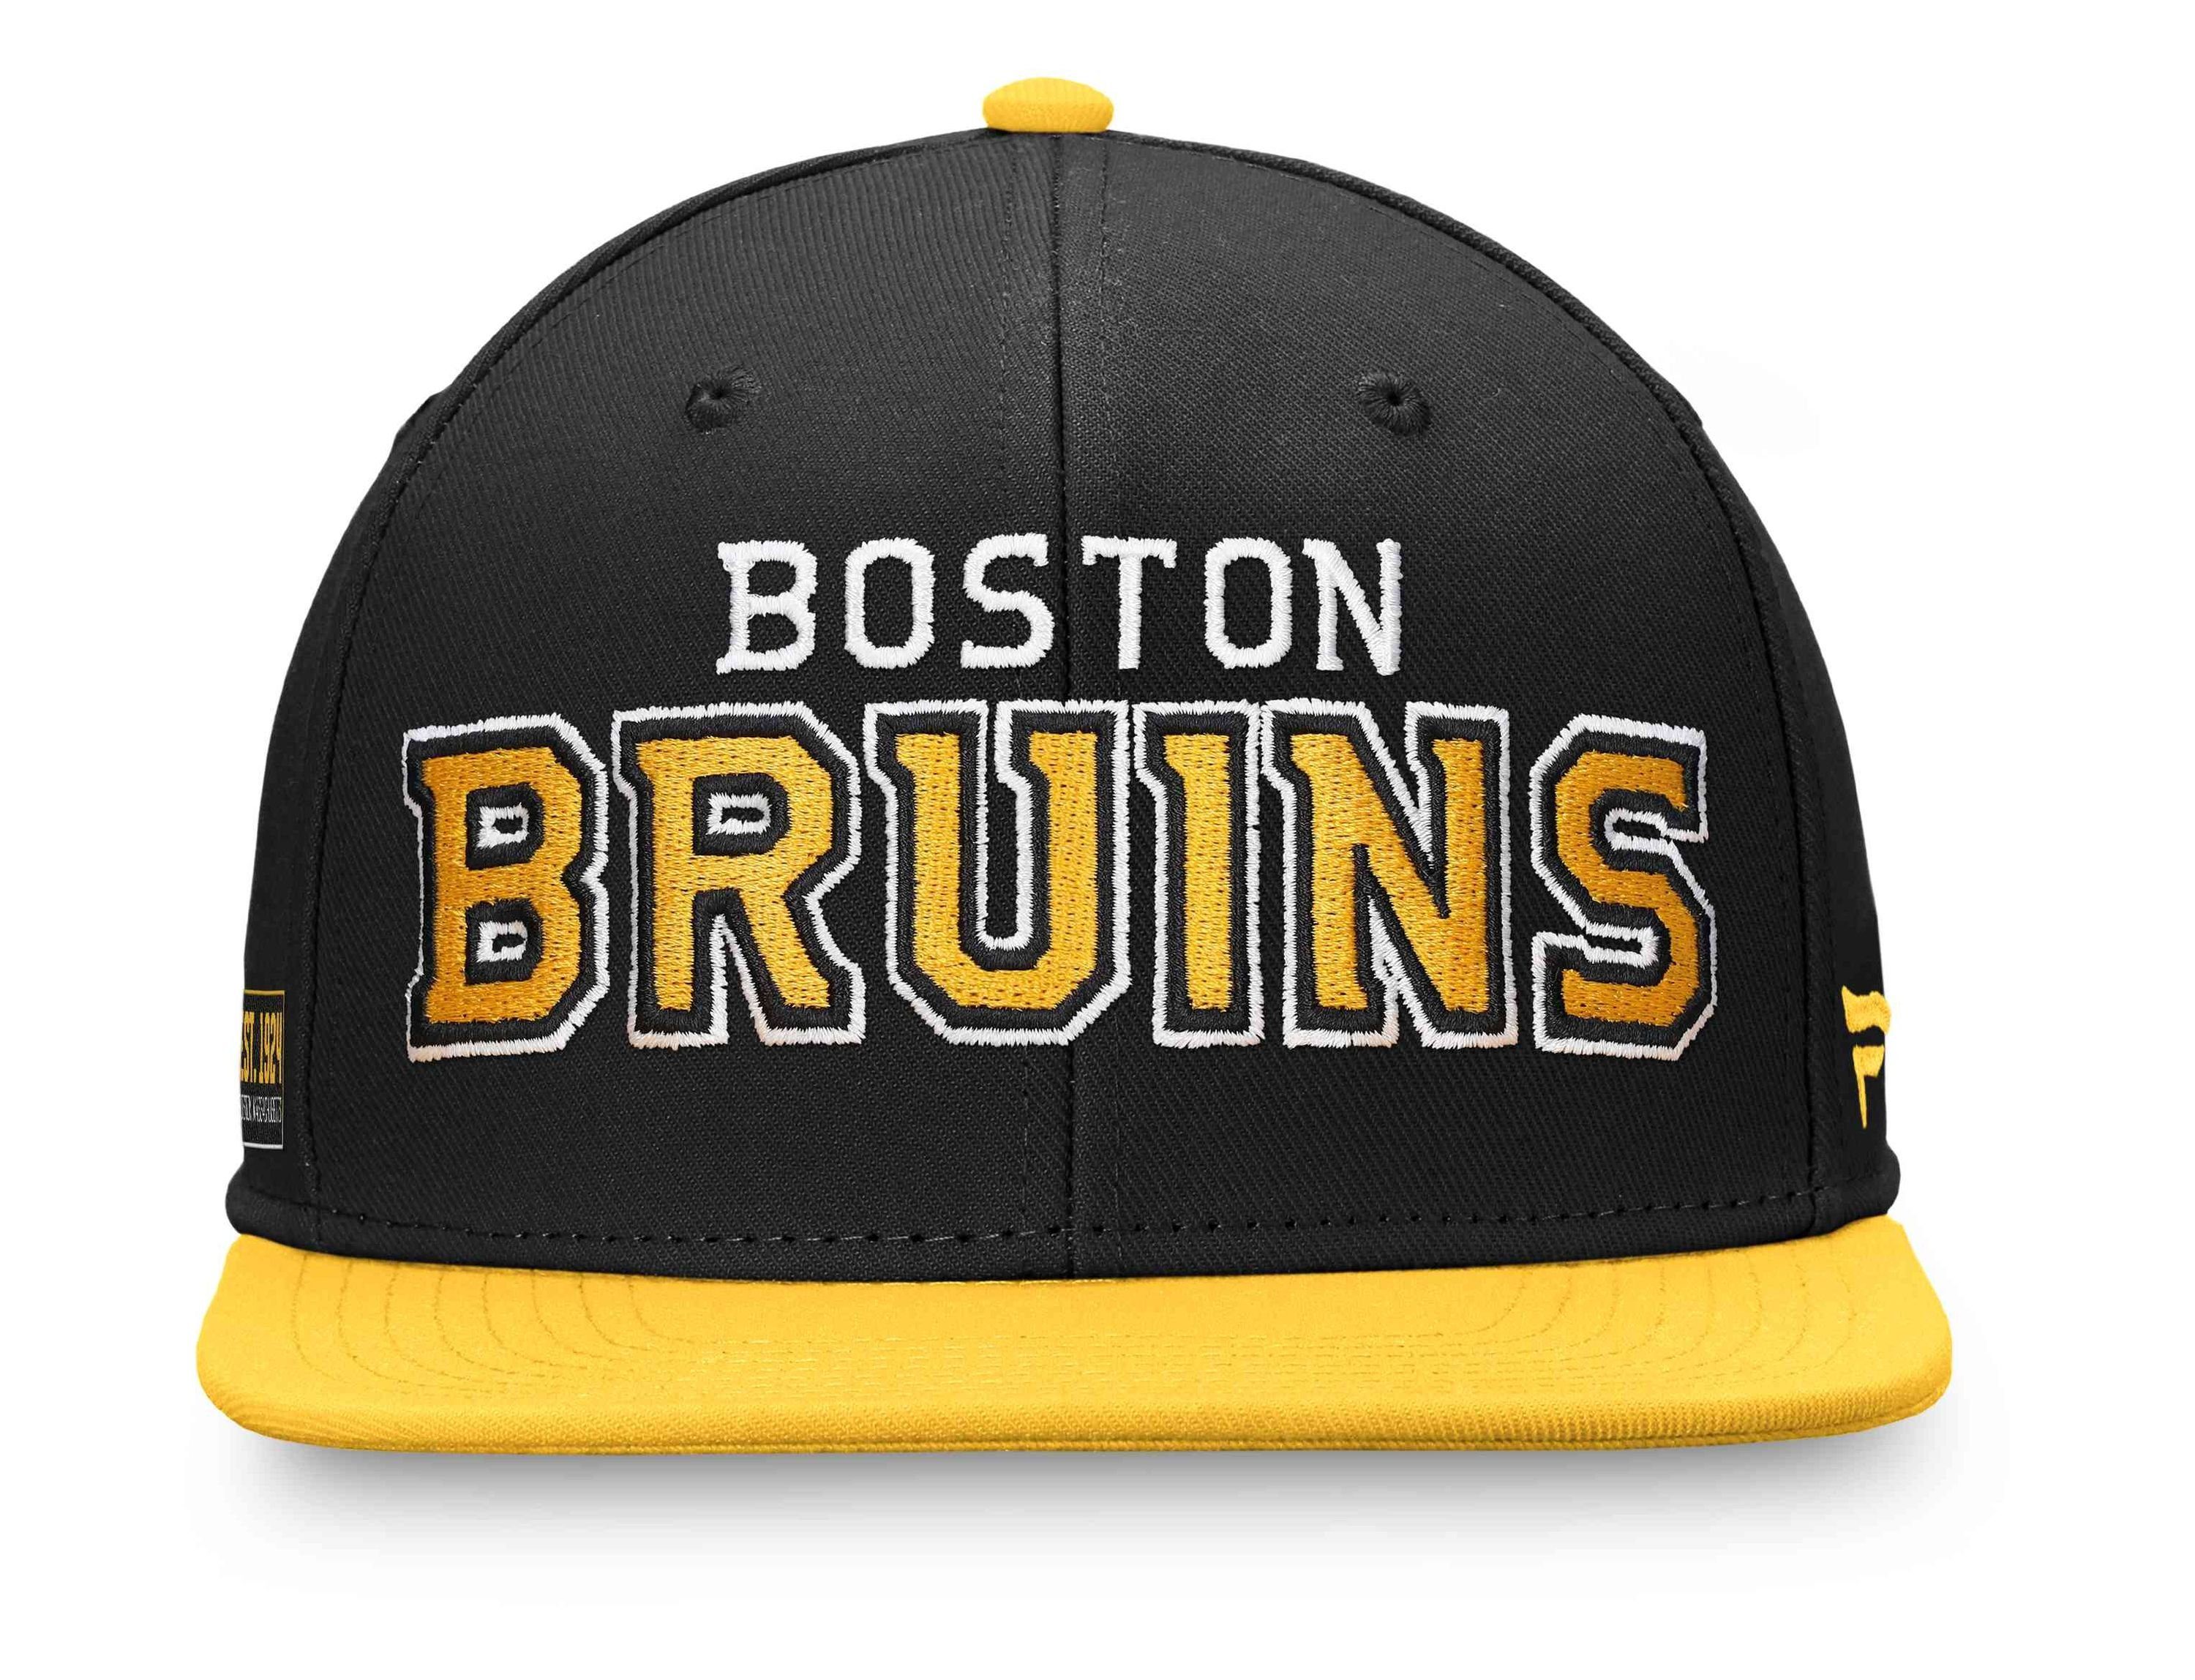 Snapback Color NHL Fanatics Bruins Boston Iconic Cap Blocked